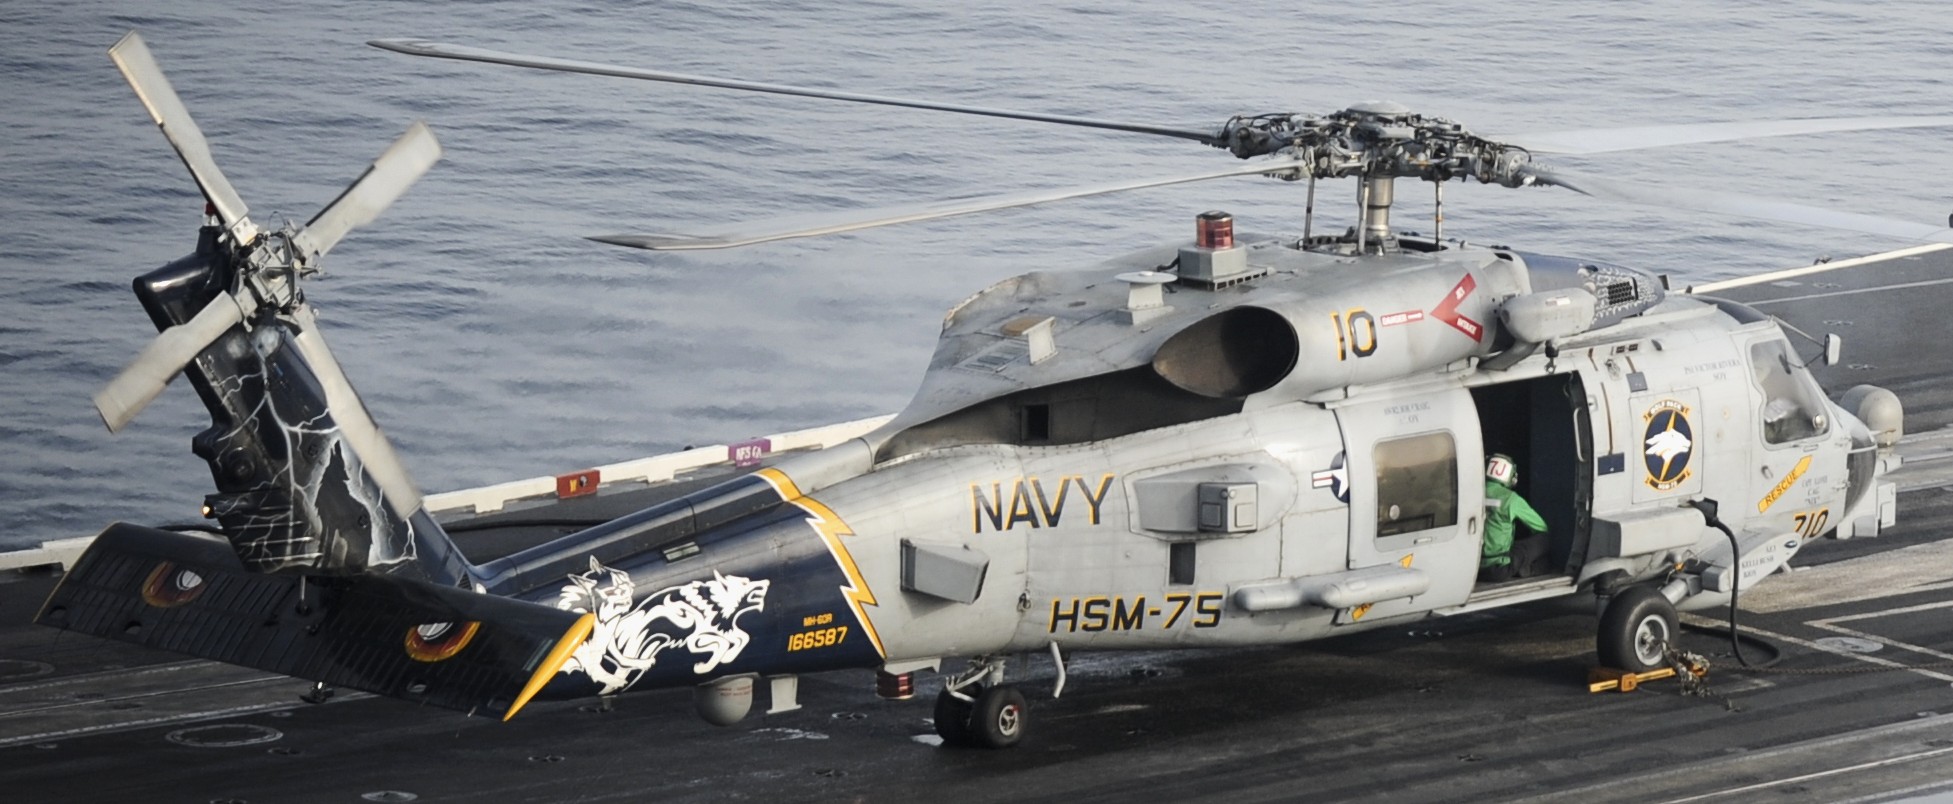 hsm-75 wolf pack helicopter maritime strike squadron mh-60r seahawk cvw-11 cvn-68 uss nimitz 57